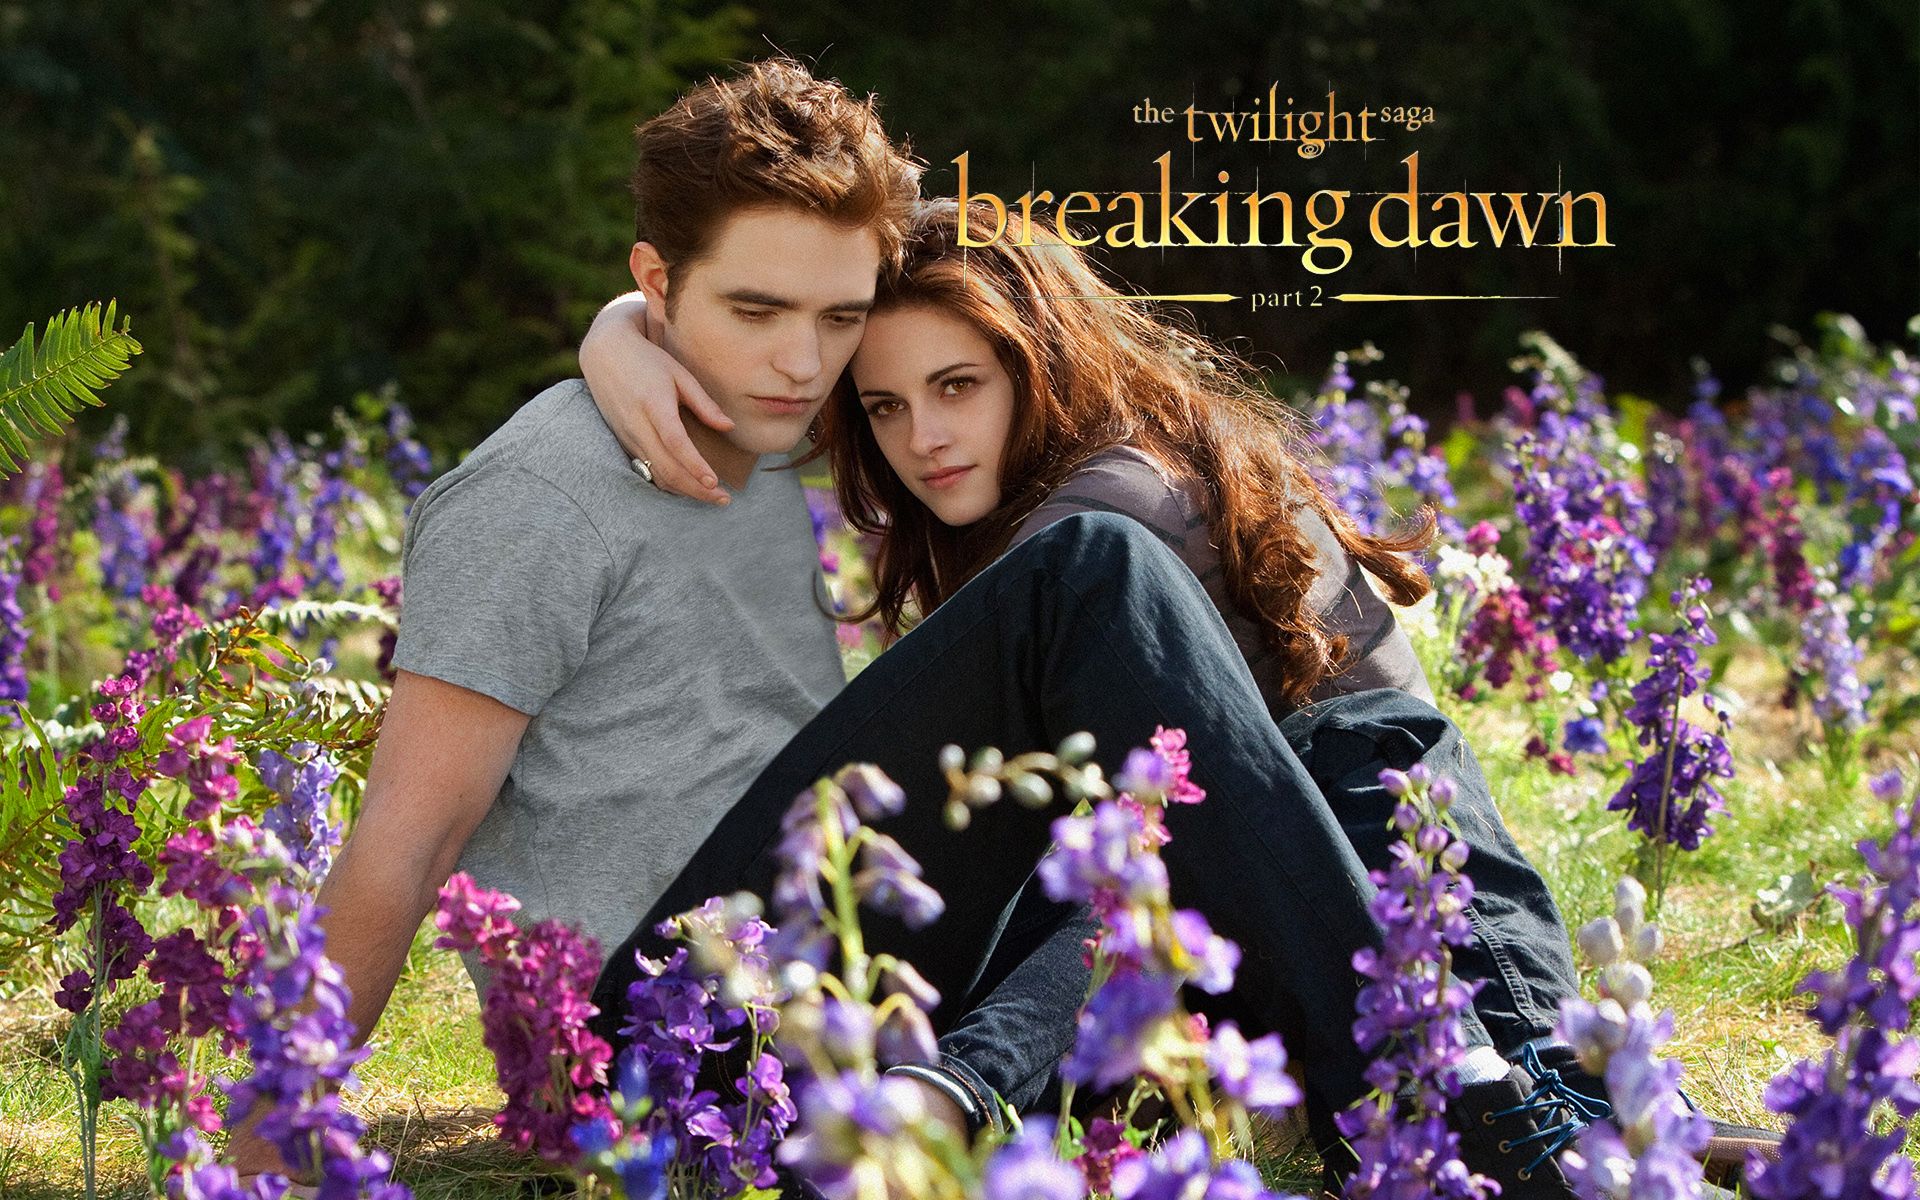 BD part 2 wallpaper - The Twilight Saga Breaking Dawn Part II